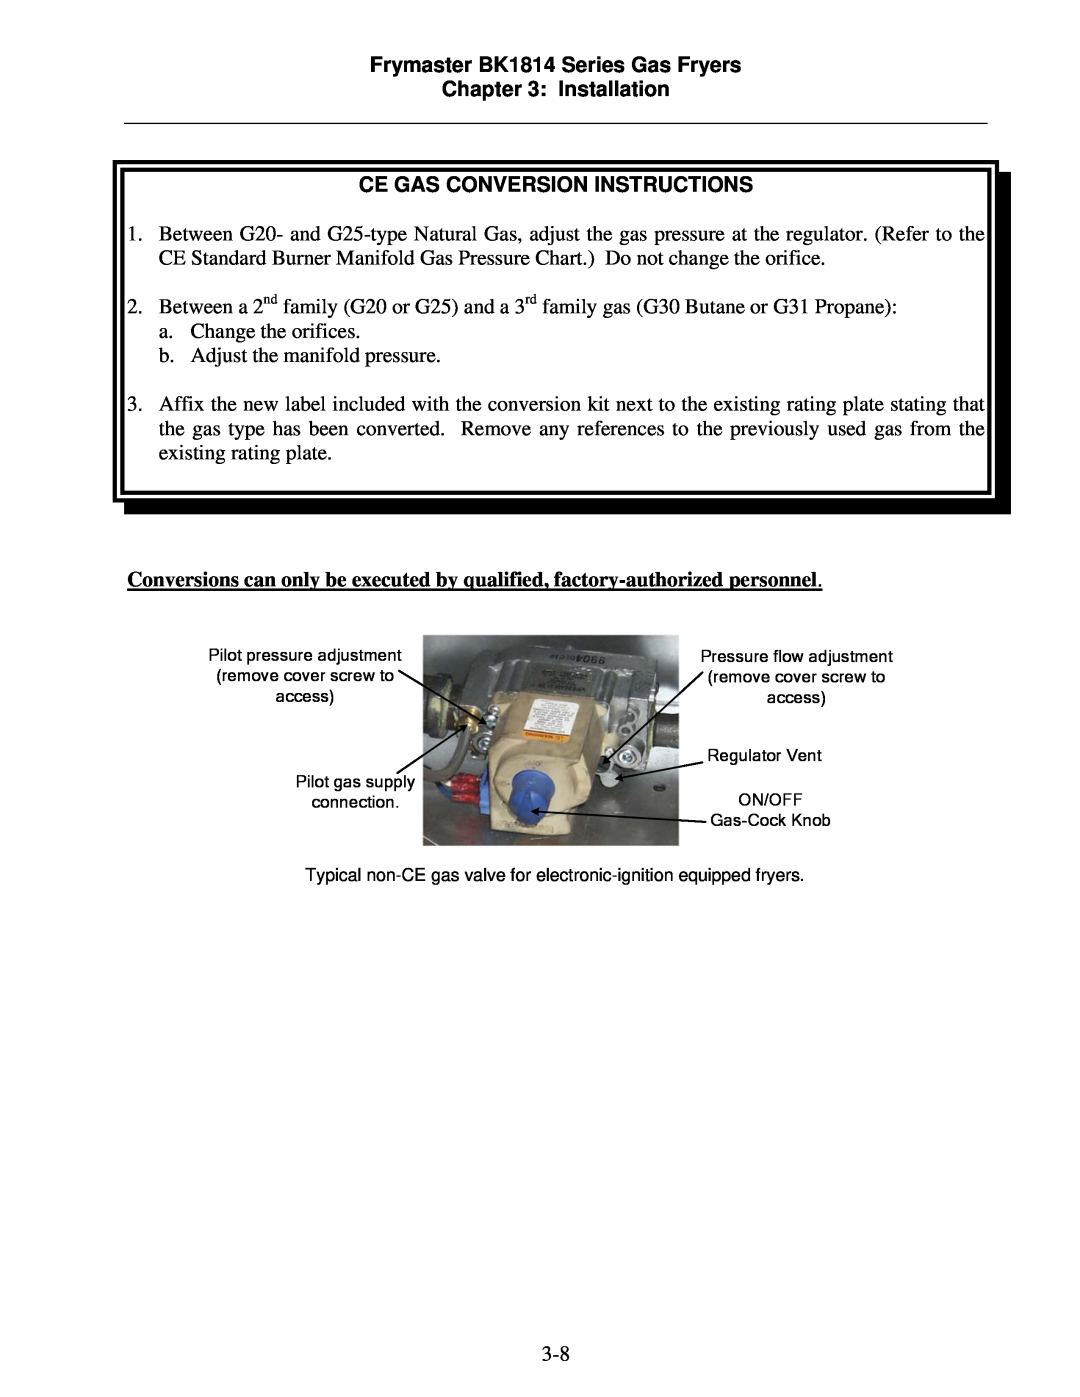 Frymaster BK1814 operation manual a. Change the orifices b. Adjust the manifold pressure 